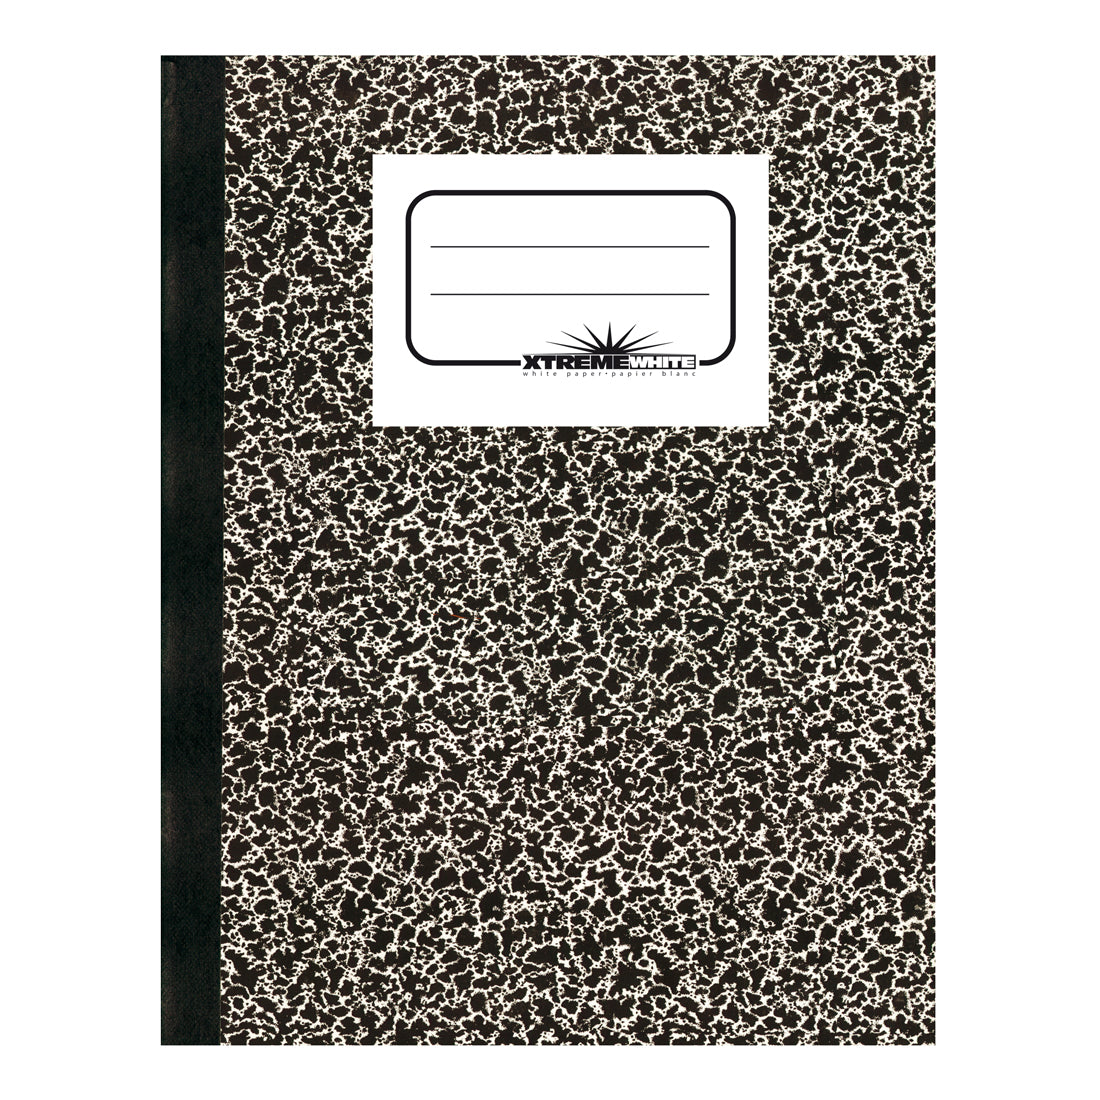 Xtreme White Notebook 43461